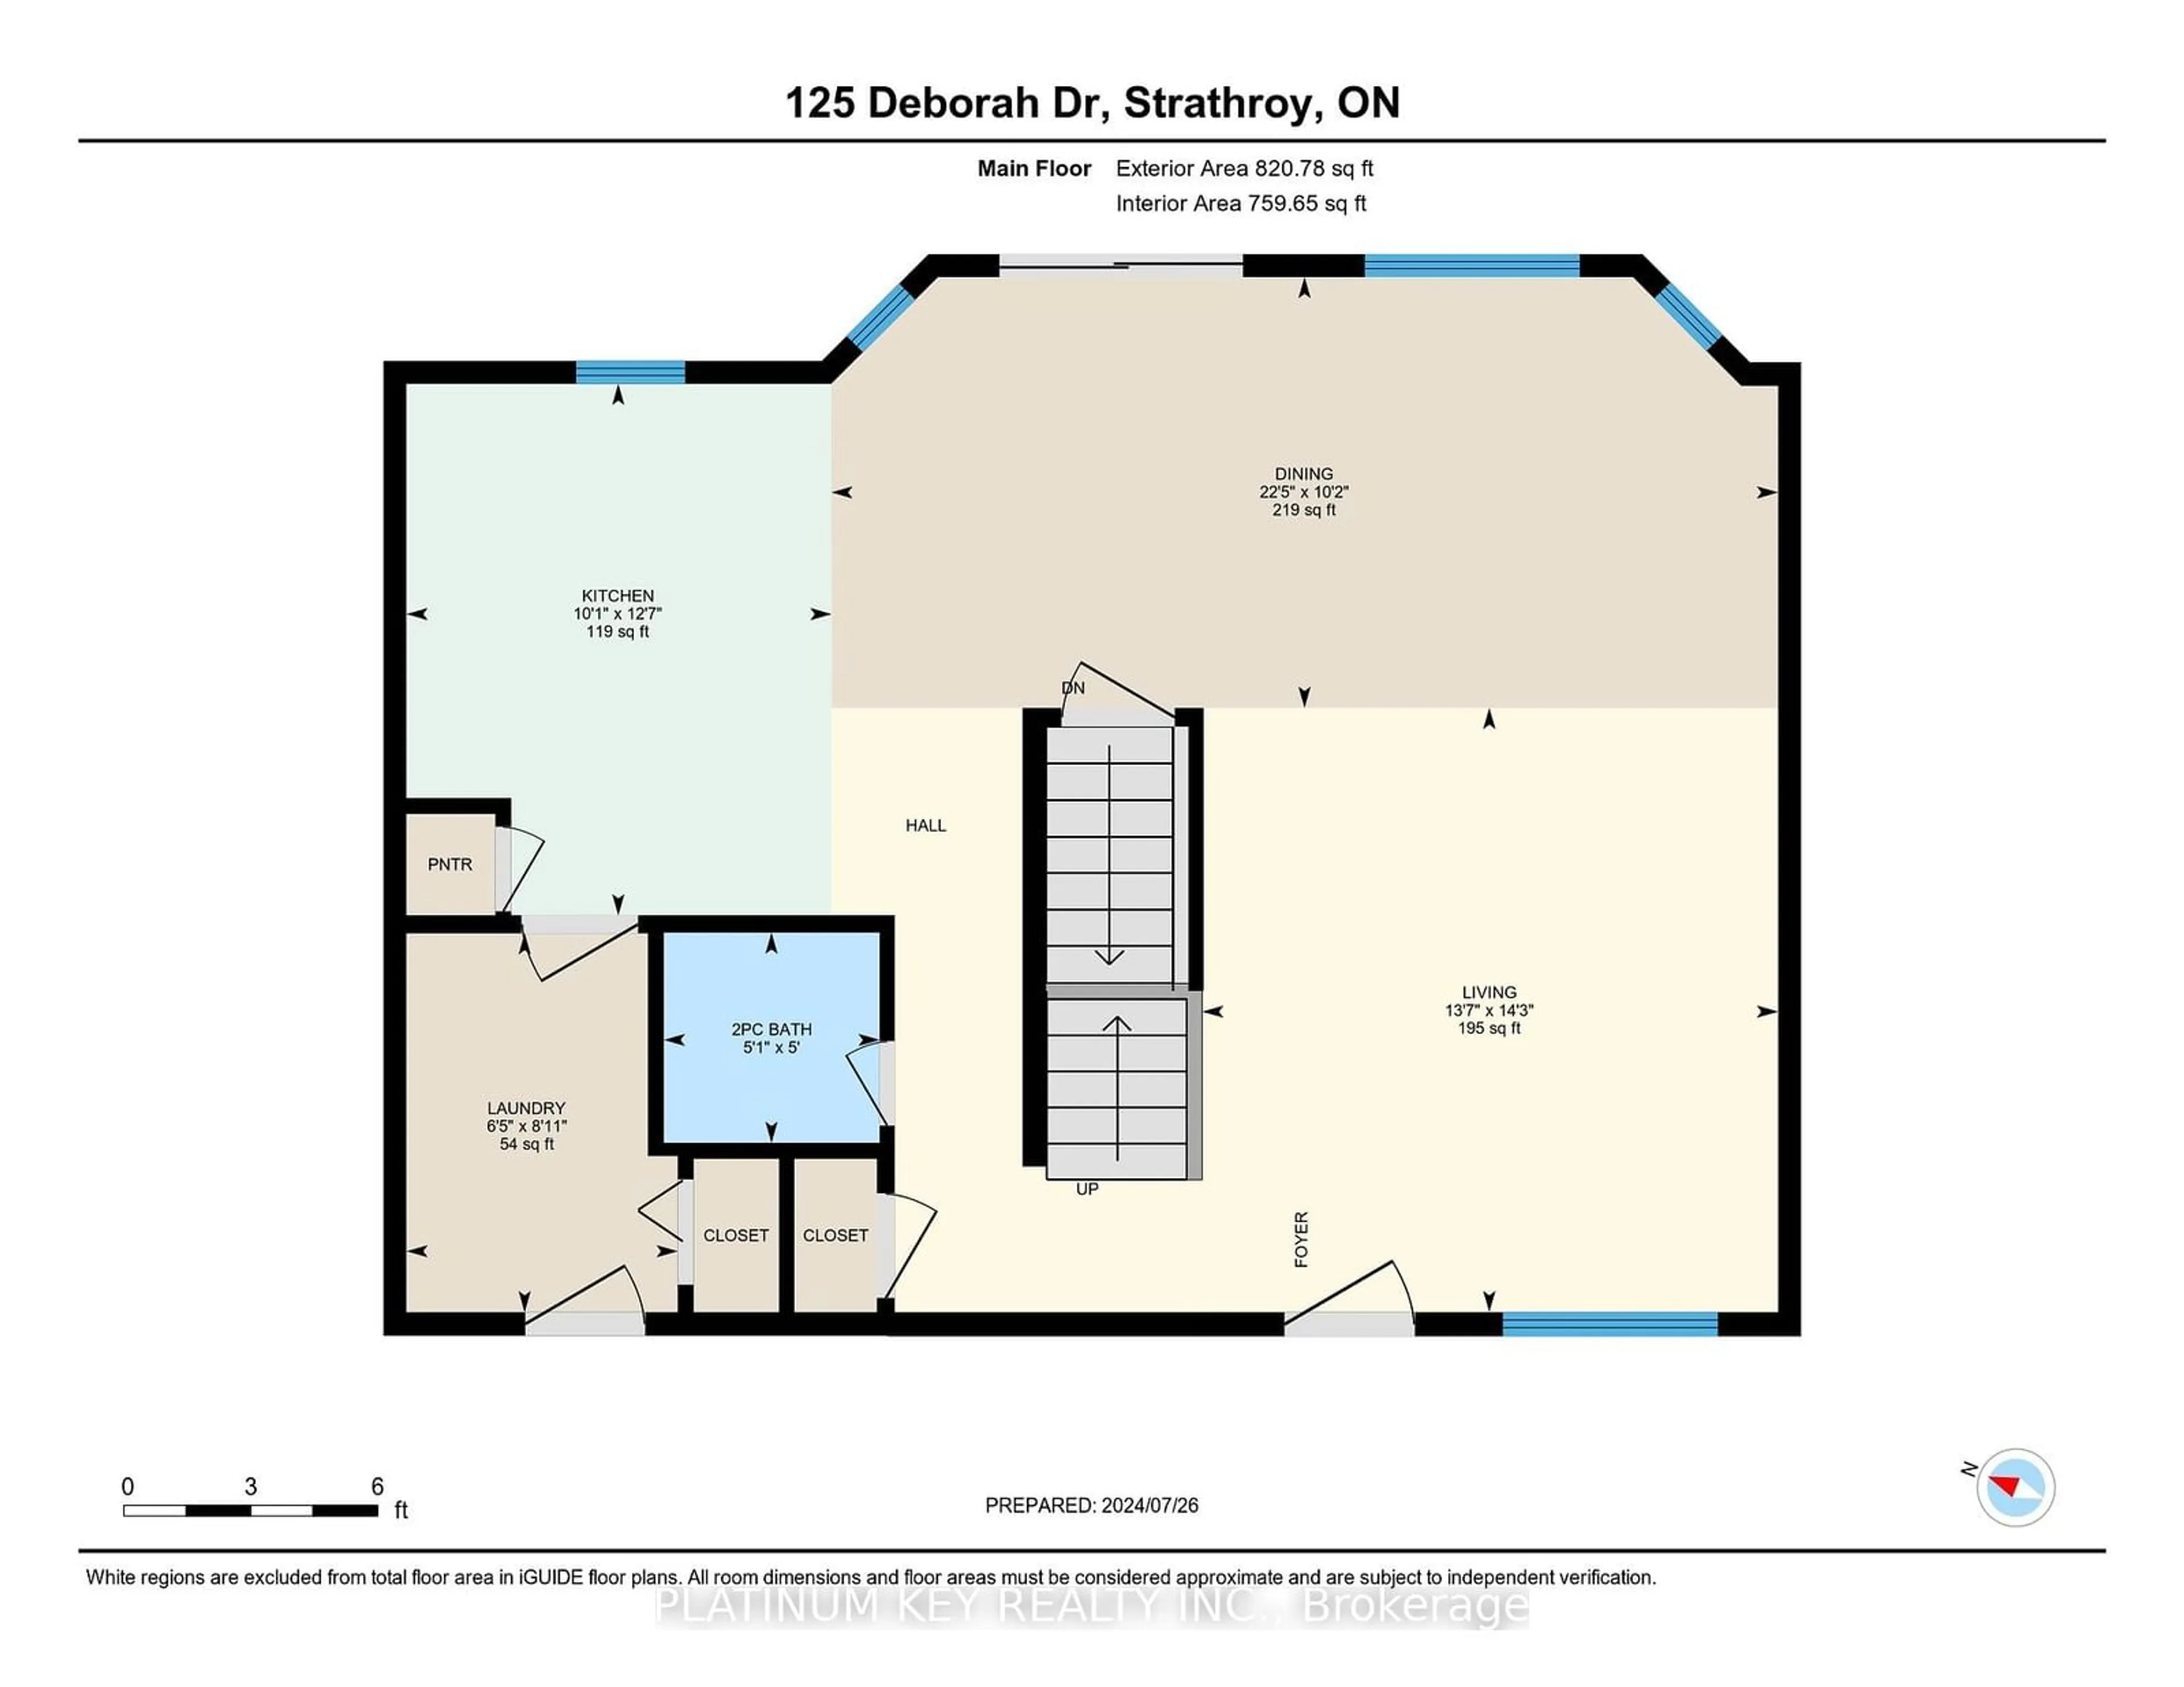 Floor plan for 125 Deborah Dr, Strathroy-Caradoc Ontario N7G 4E2